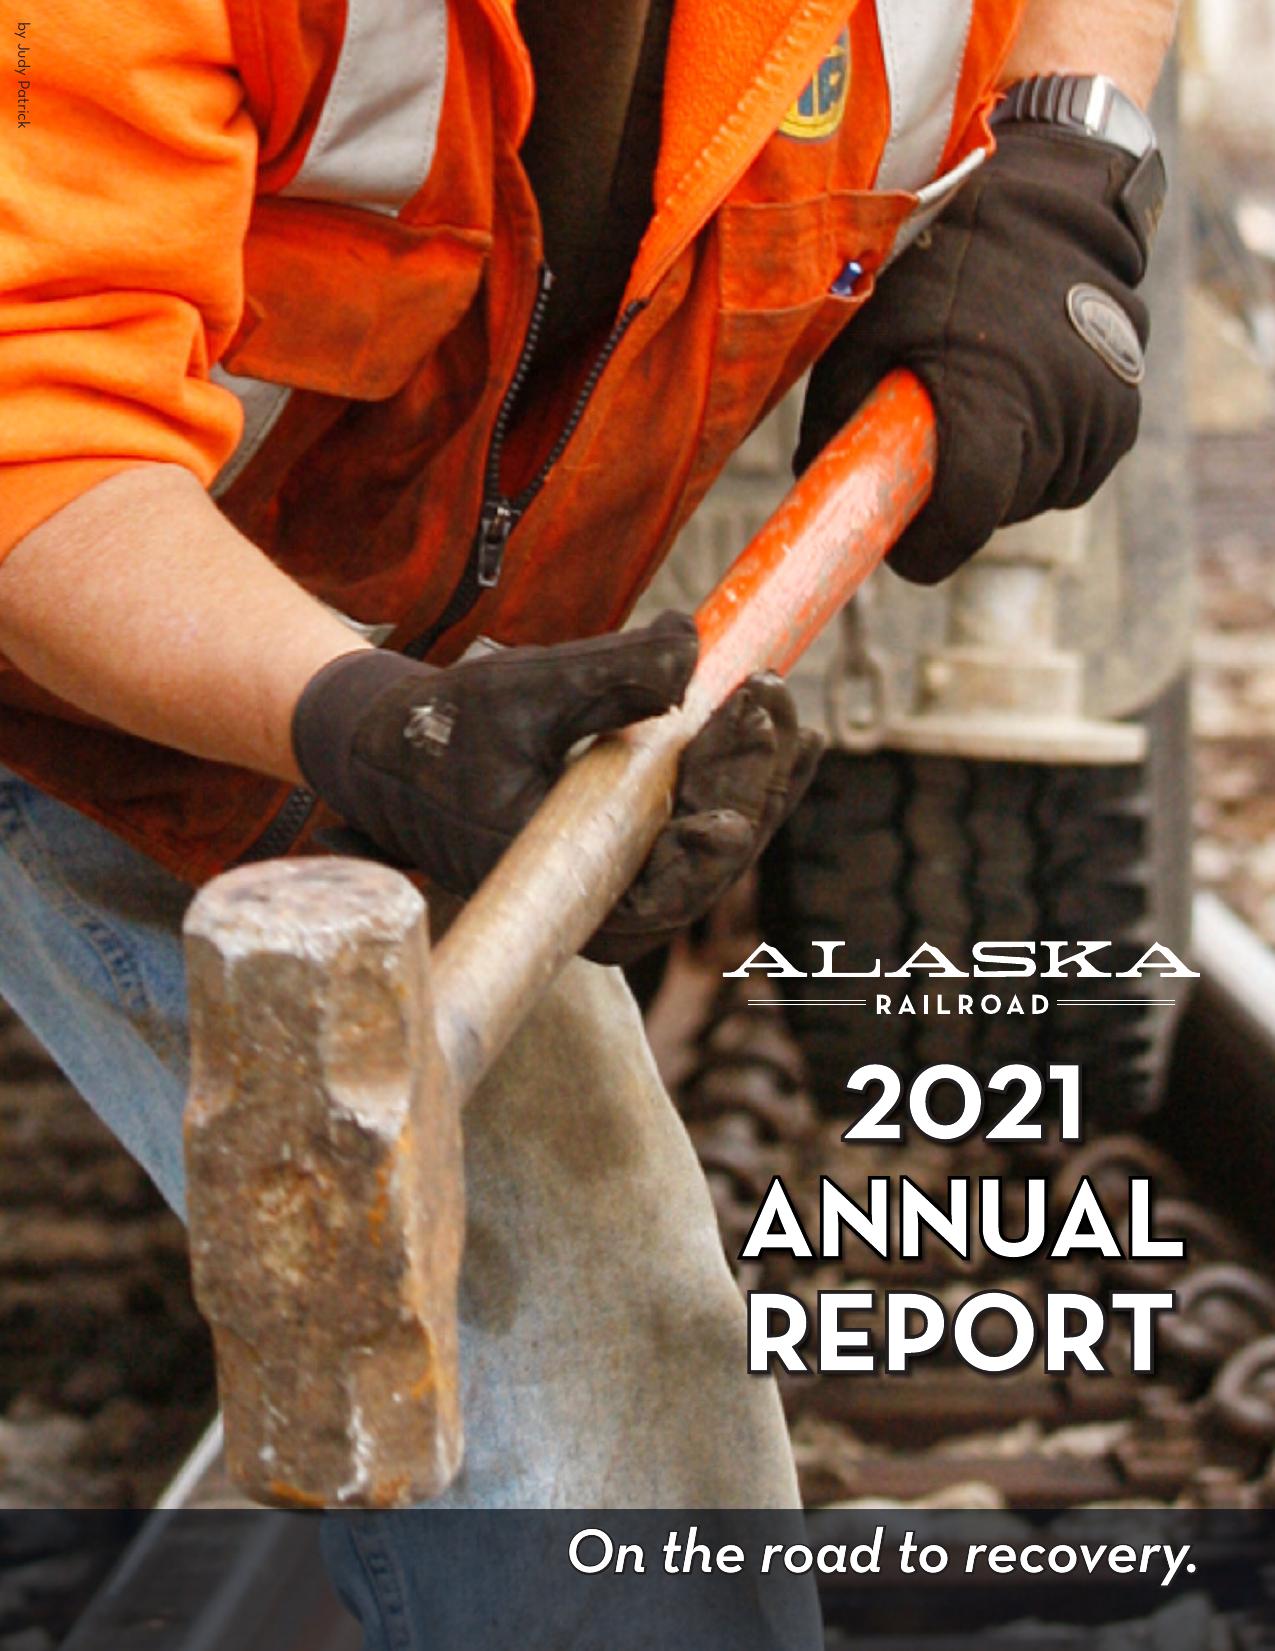 AMERICAN-RAILS Annual Report